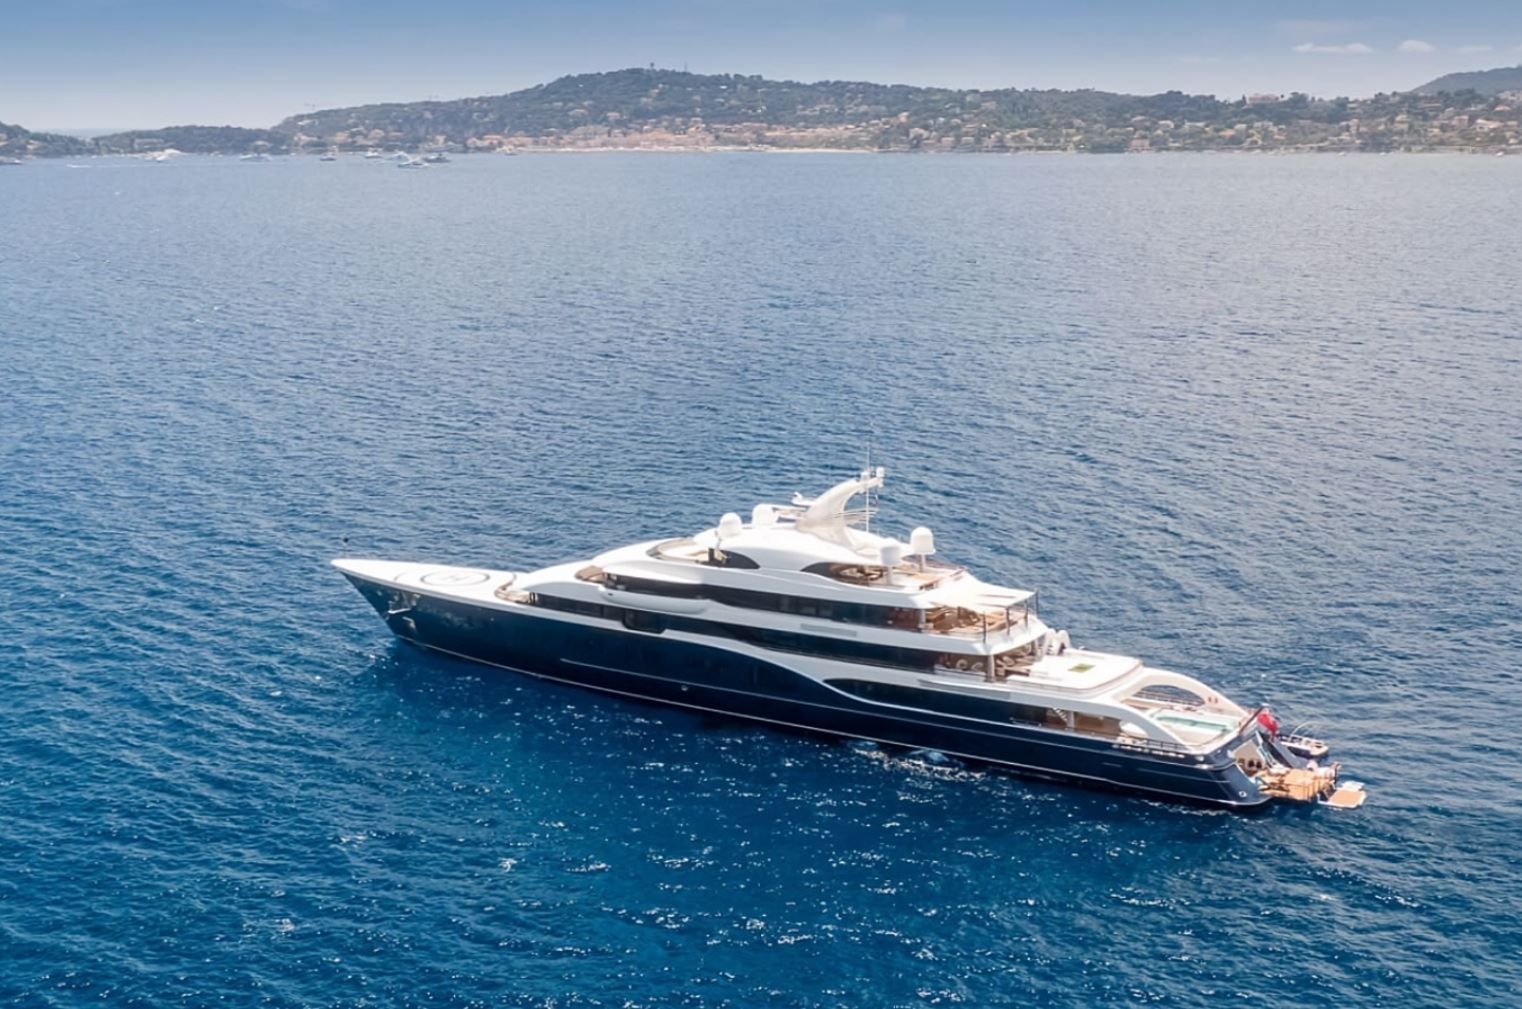 SYMPHONY Yacht - Luxuriant $150 Million Superyacht